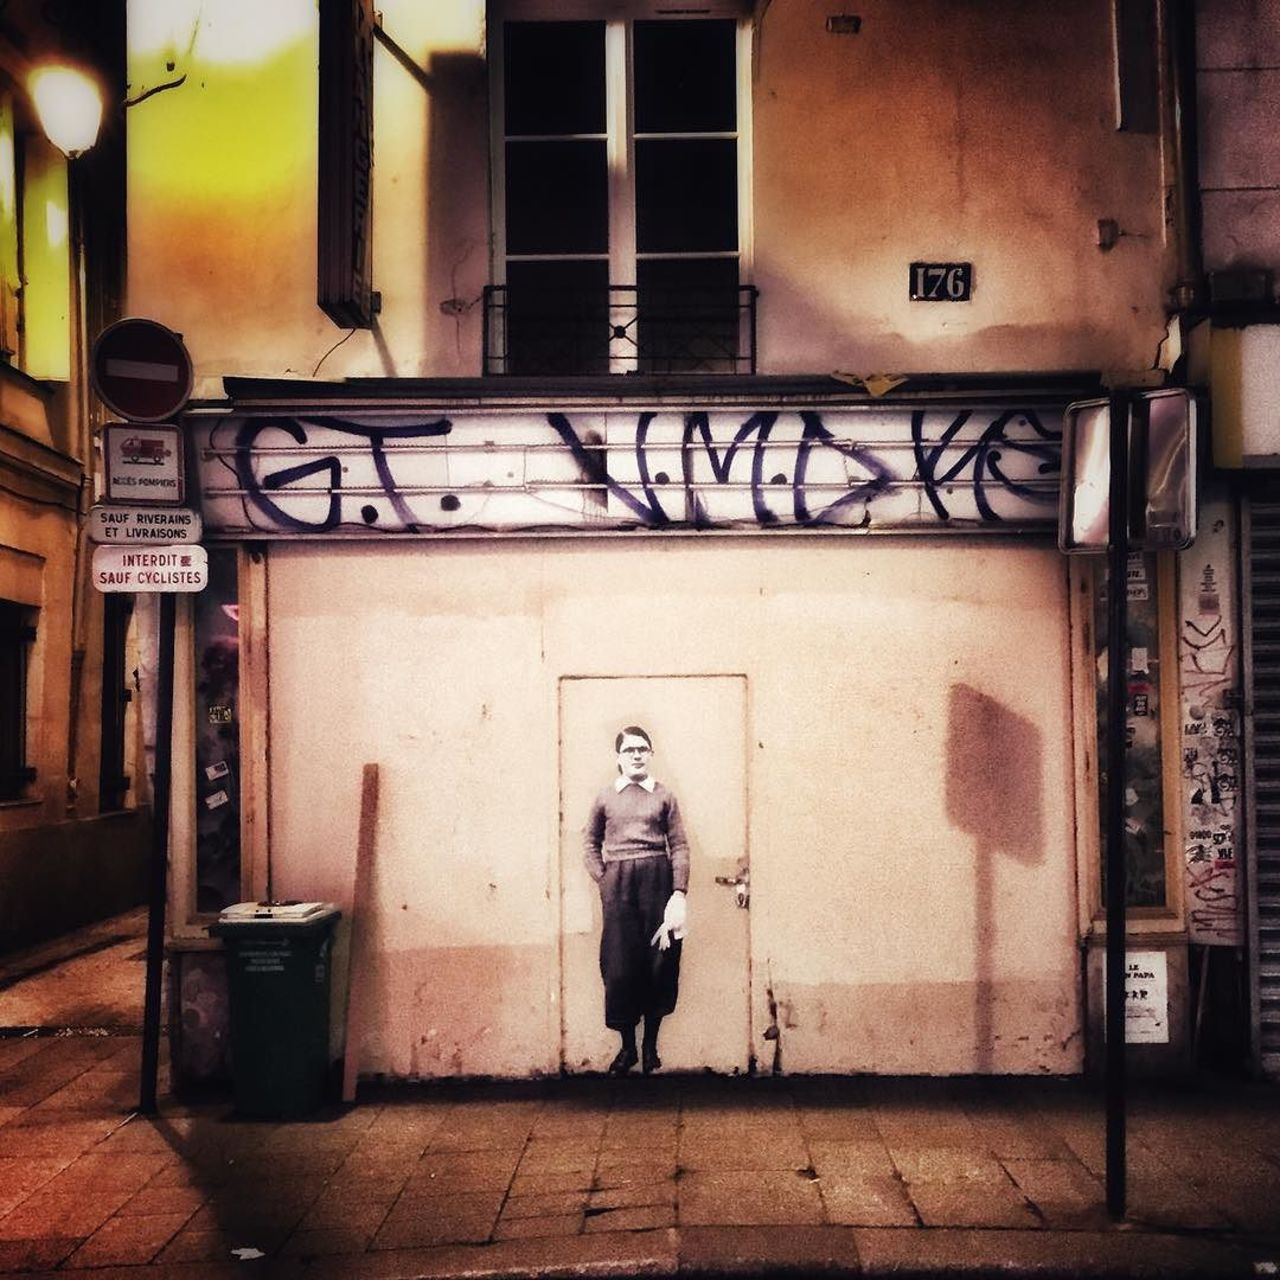 #Paris #graffiti photo by @hugdubois http://ift.tt/1i7rIHS #StreetArt https://t.co/6gA0olEmq0